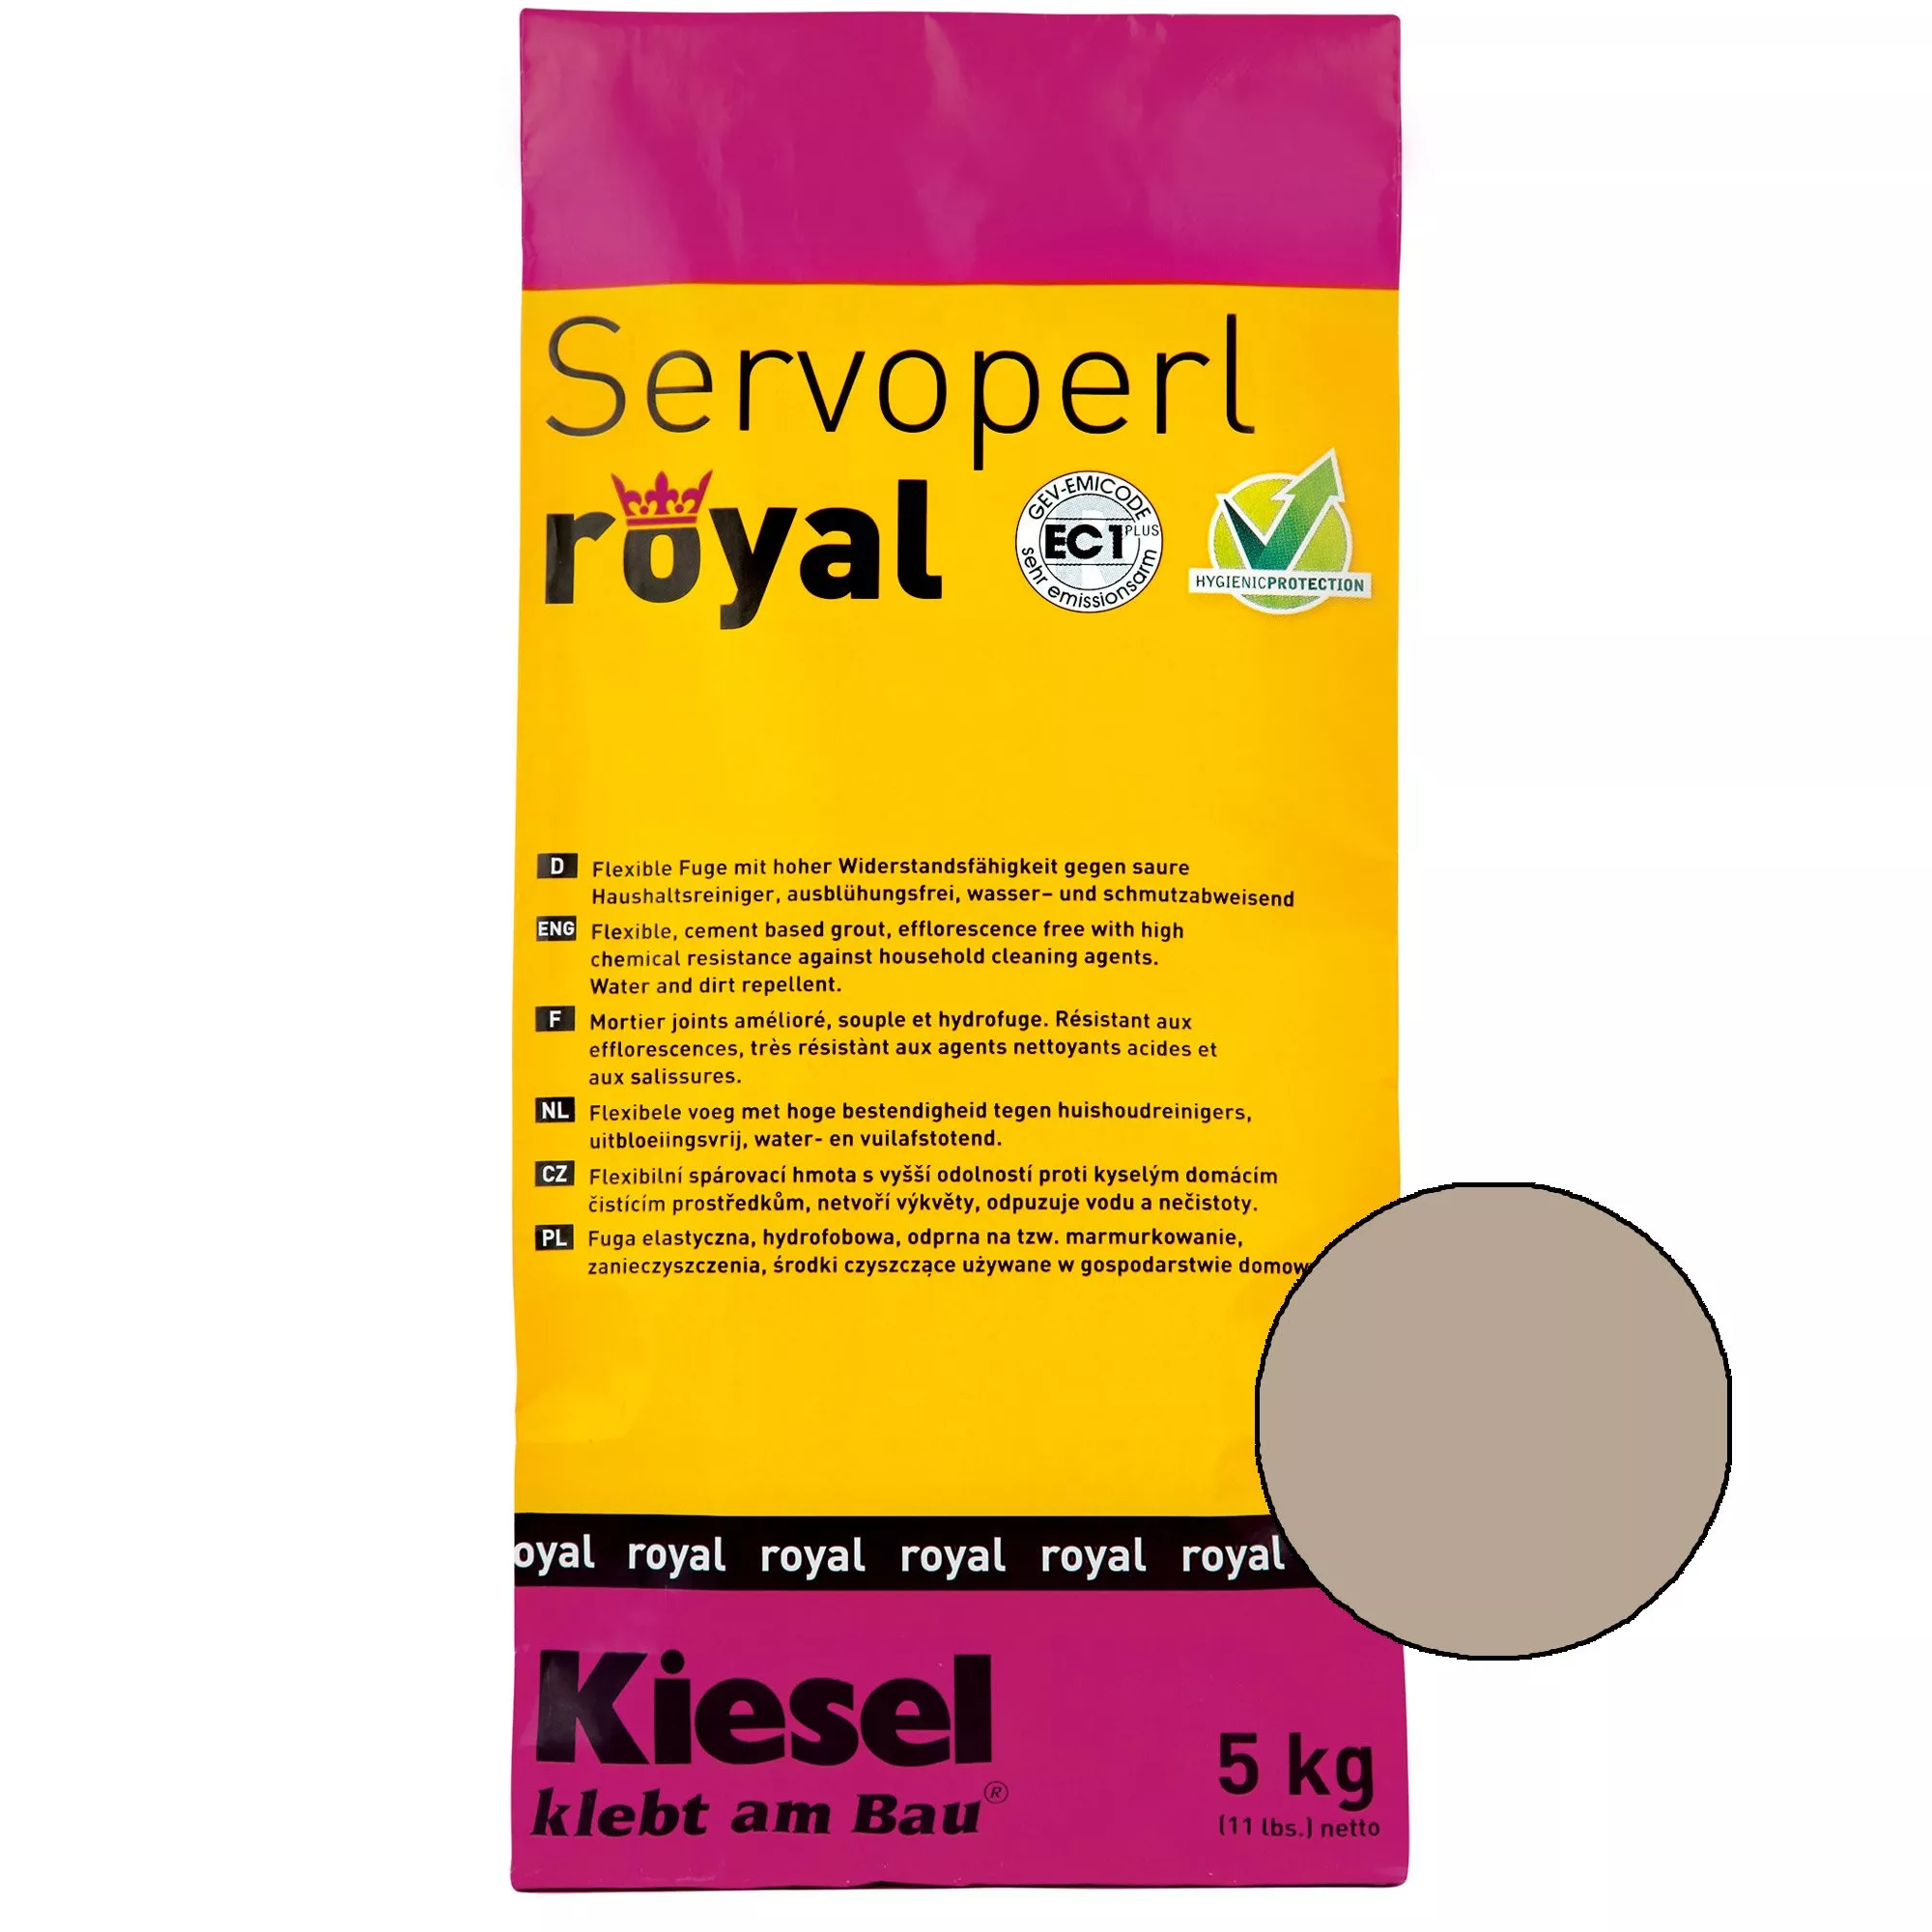 Kiesel Servoperl royal - flexible, water- and dirt-repellent joint (5KG Mochacino)